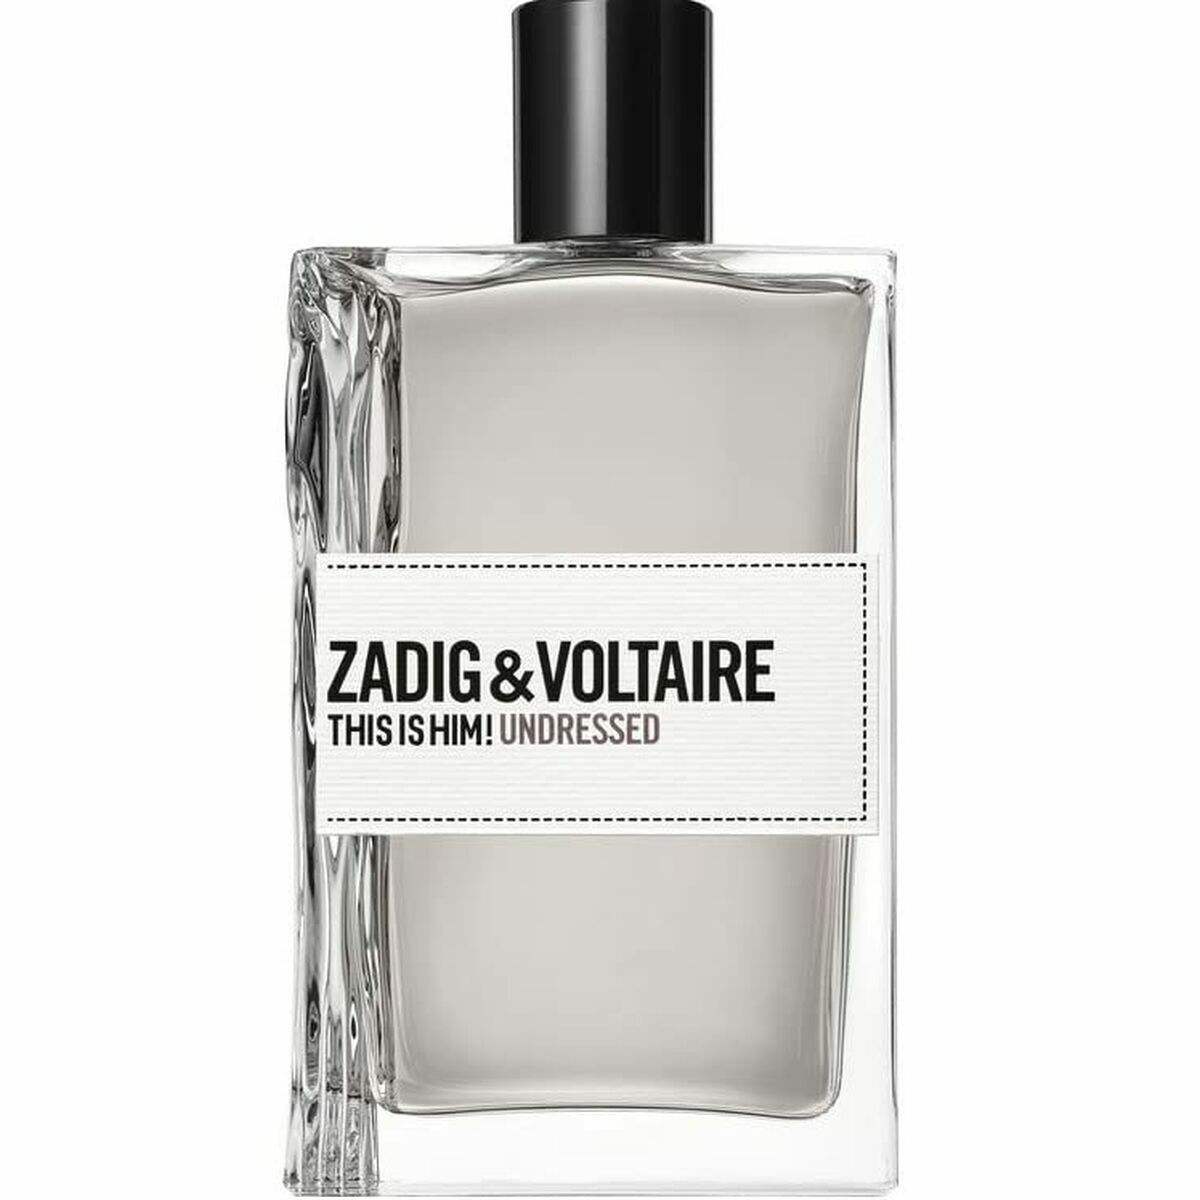 Parfum Homme Zadig & Voltaire EDT This is him! Undressed 50 ml - Zadig & Voltaire - Jardin D'Eyden - jardindeyden.fr